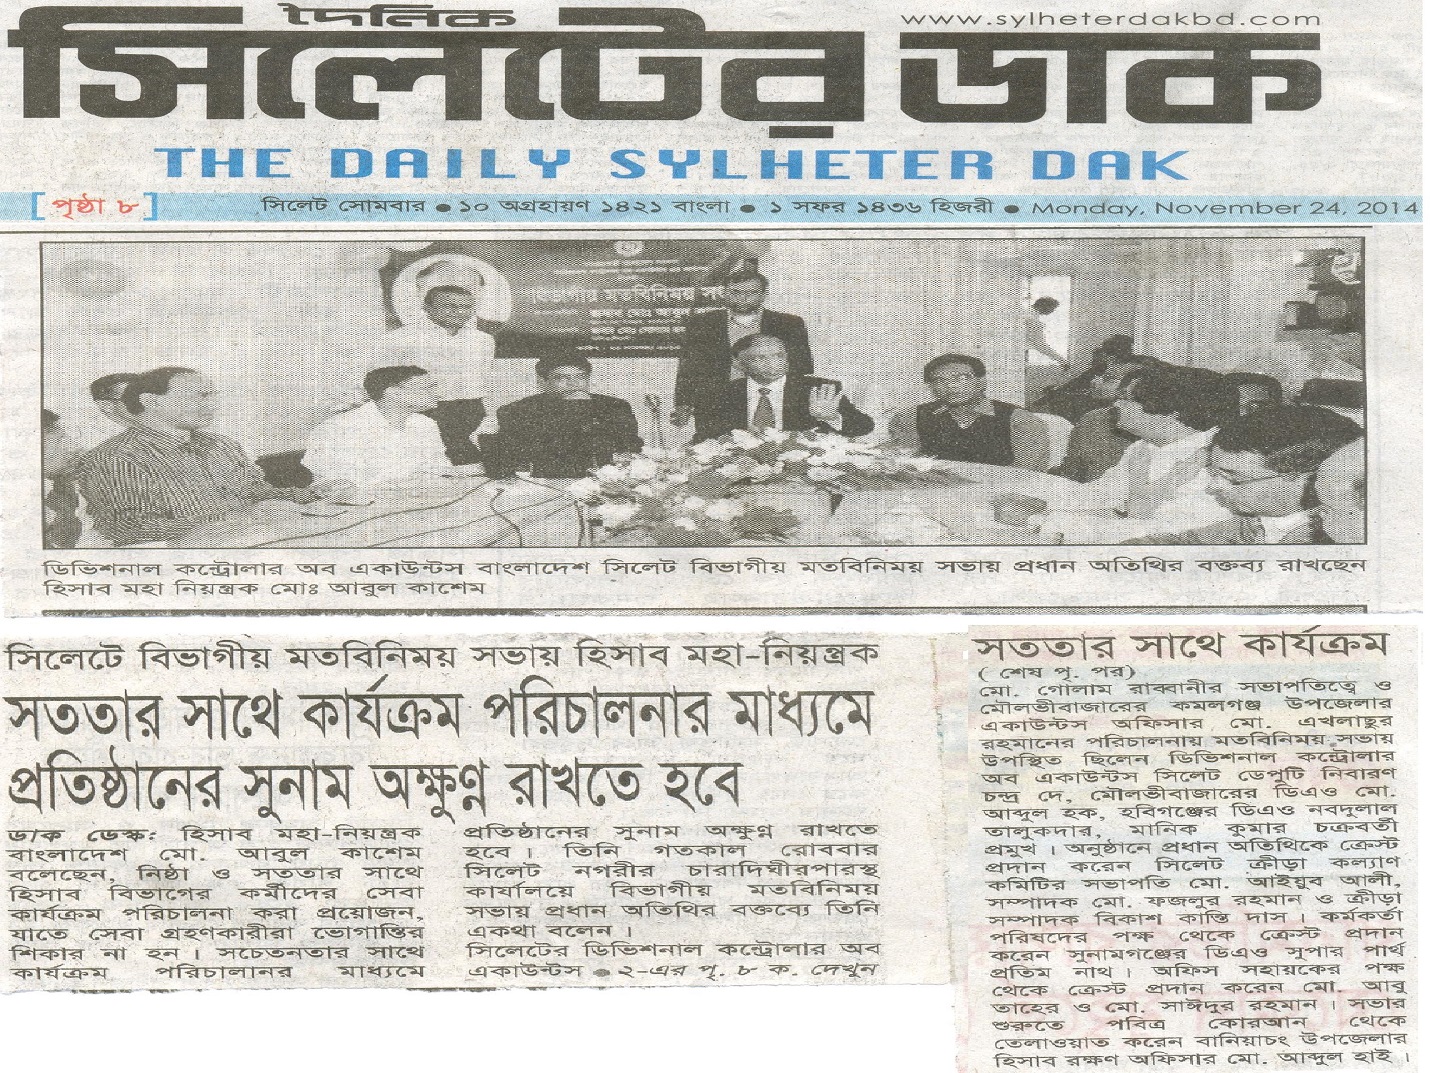 CGA_Meets_Sylhet_Officials.jpg